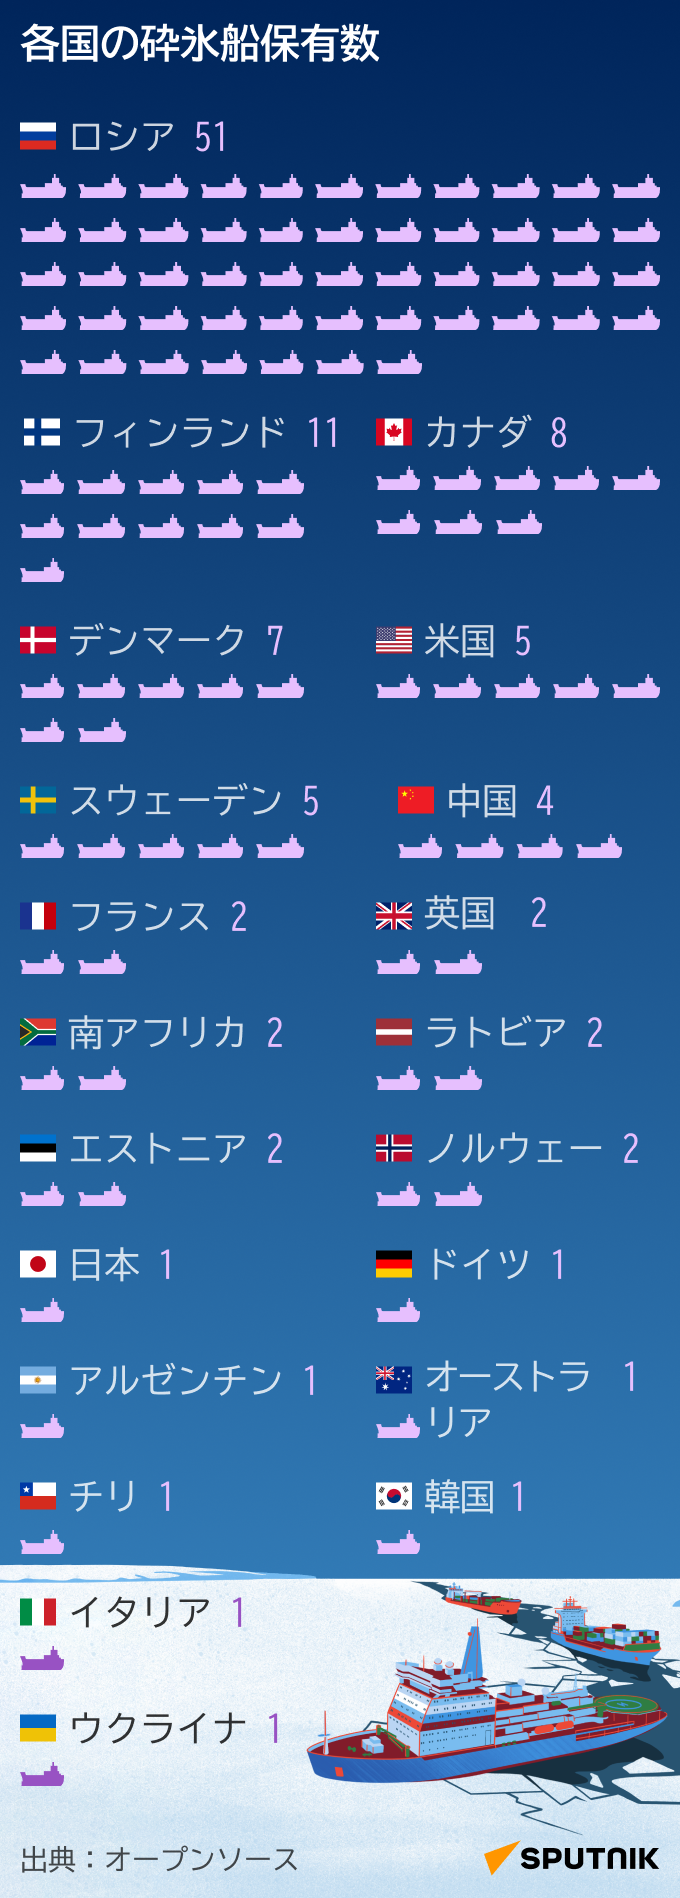 各国の砕氷船保有数 - Sputnik 日本